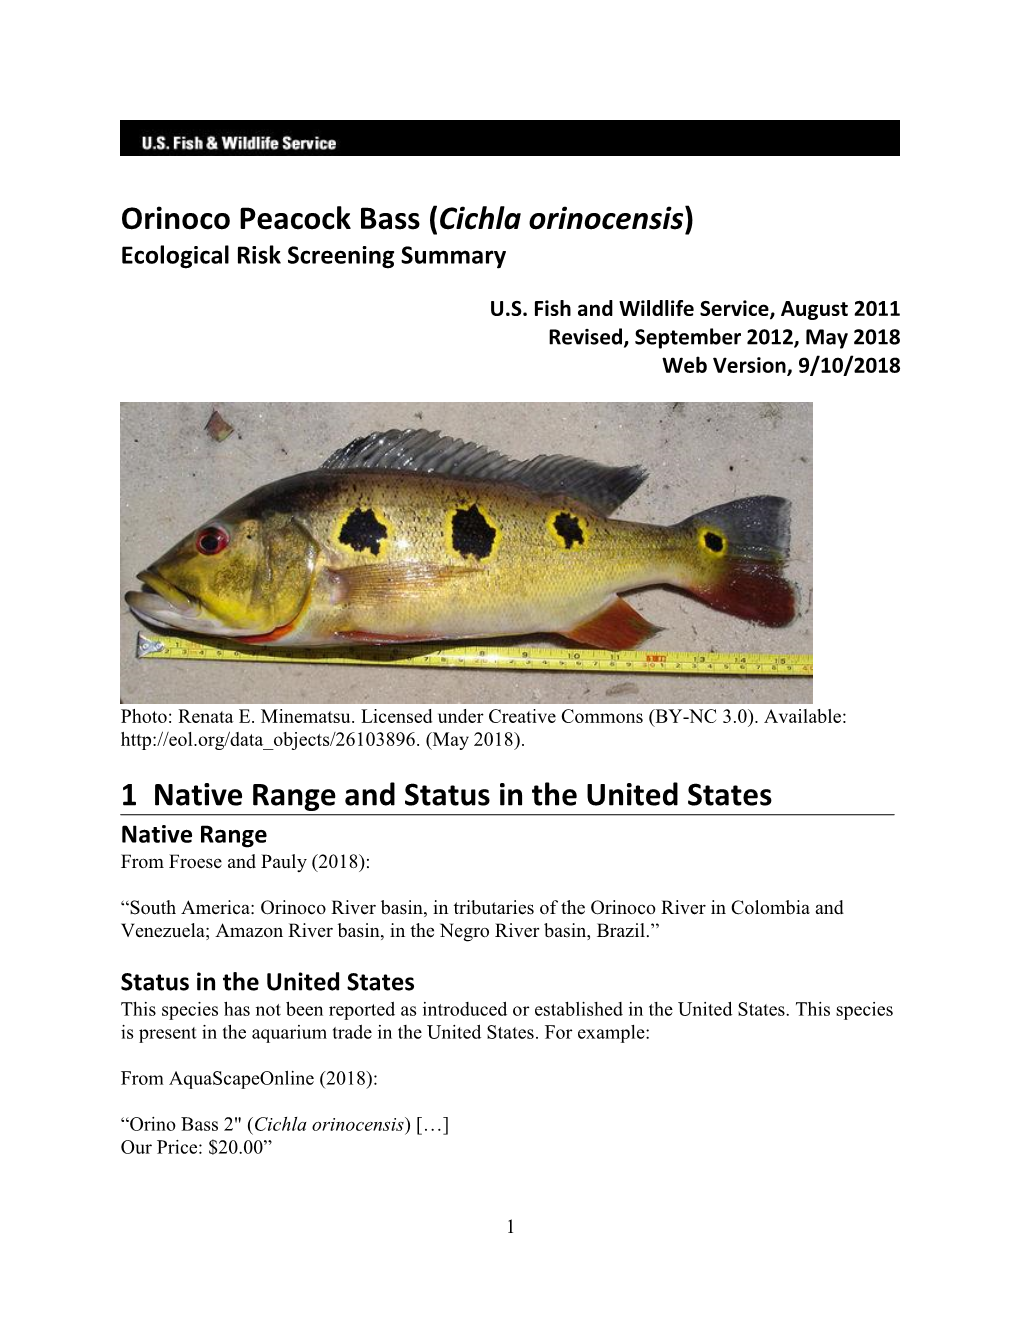 Orinoco Peacock Bass (Cichla Orinocensis) Ecological Risk Screening Summary